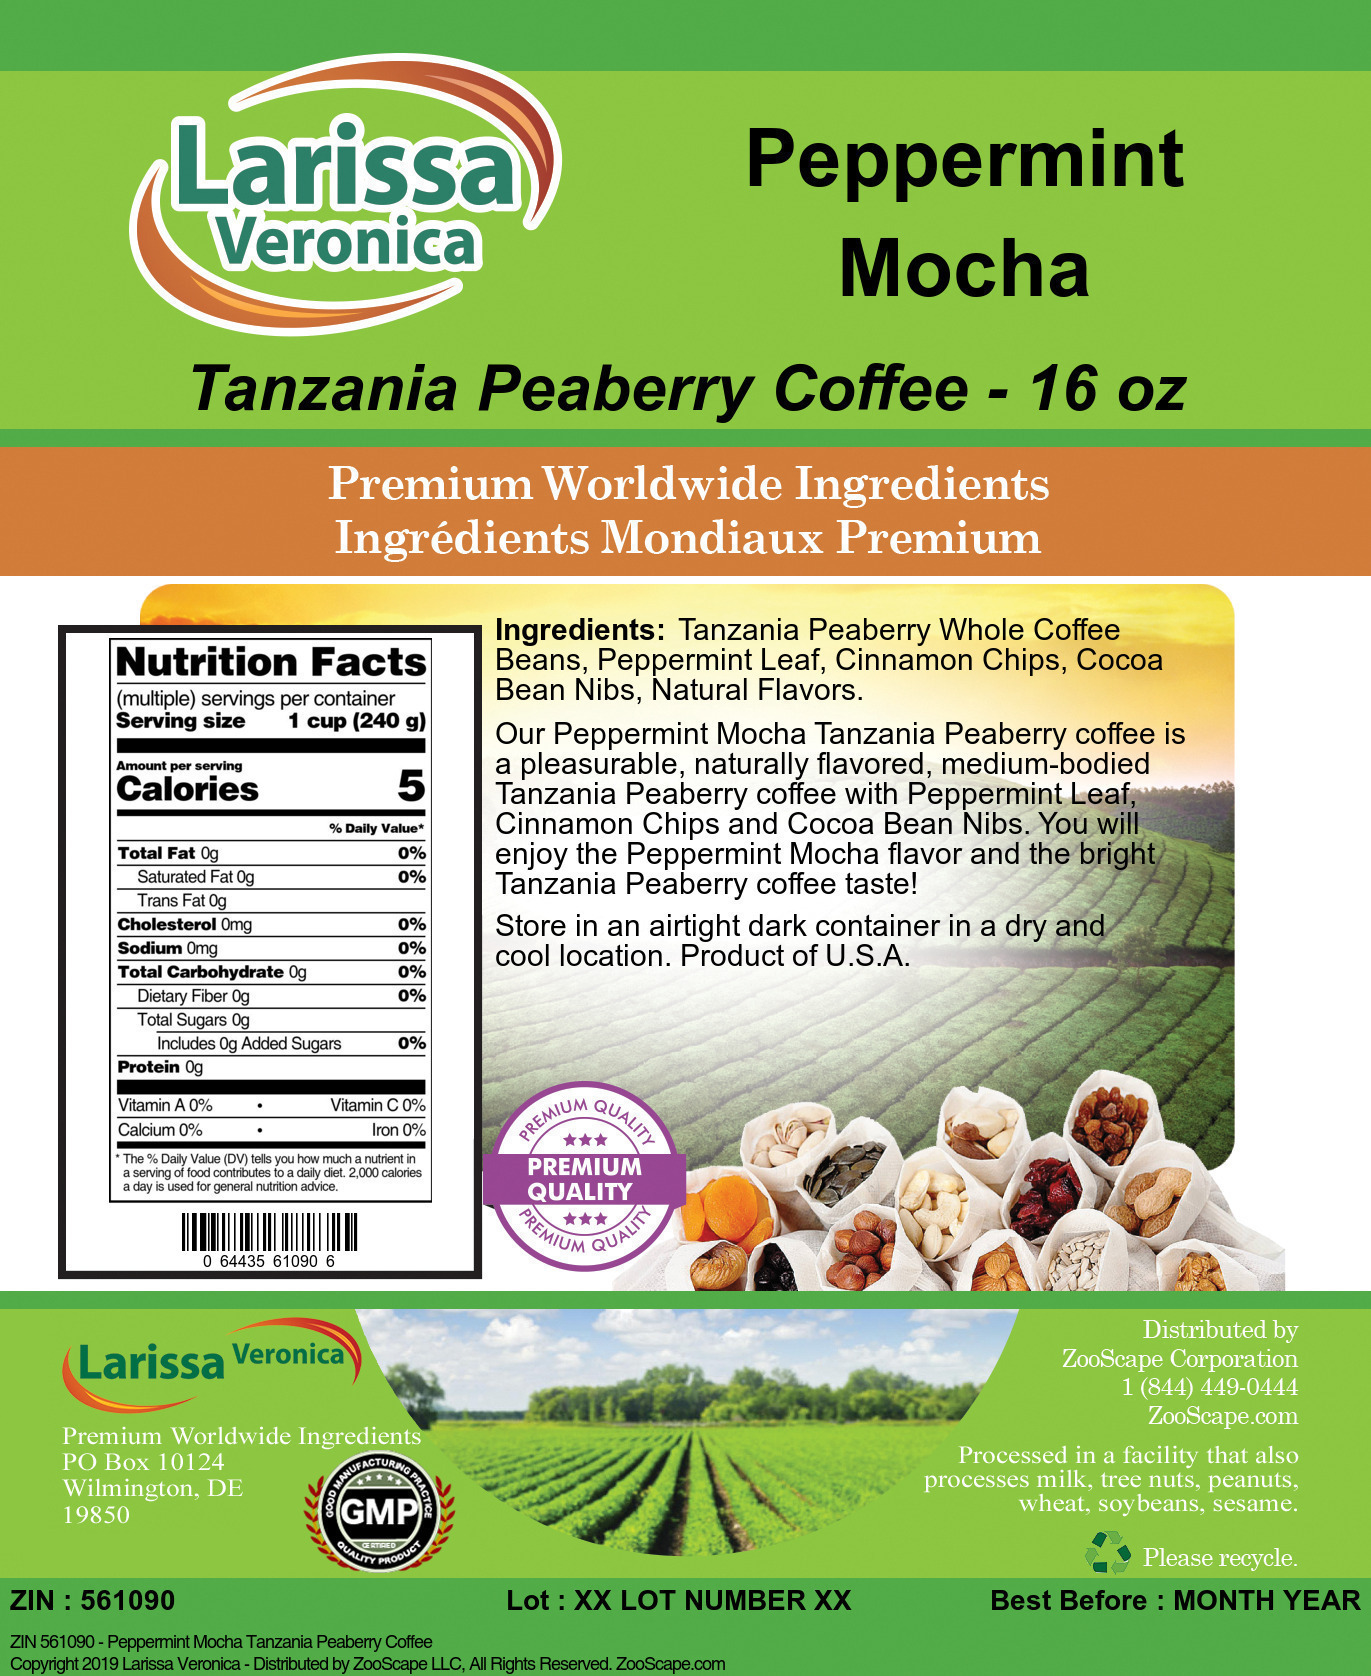 Peppermint Mocha Tanzania Peaberry Coffee - Label